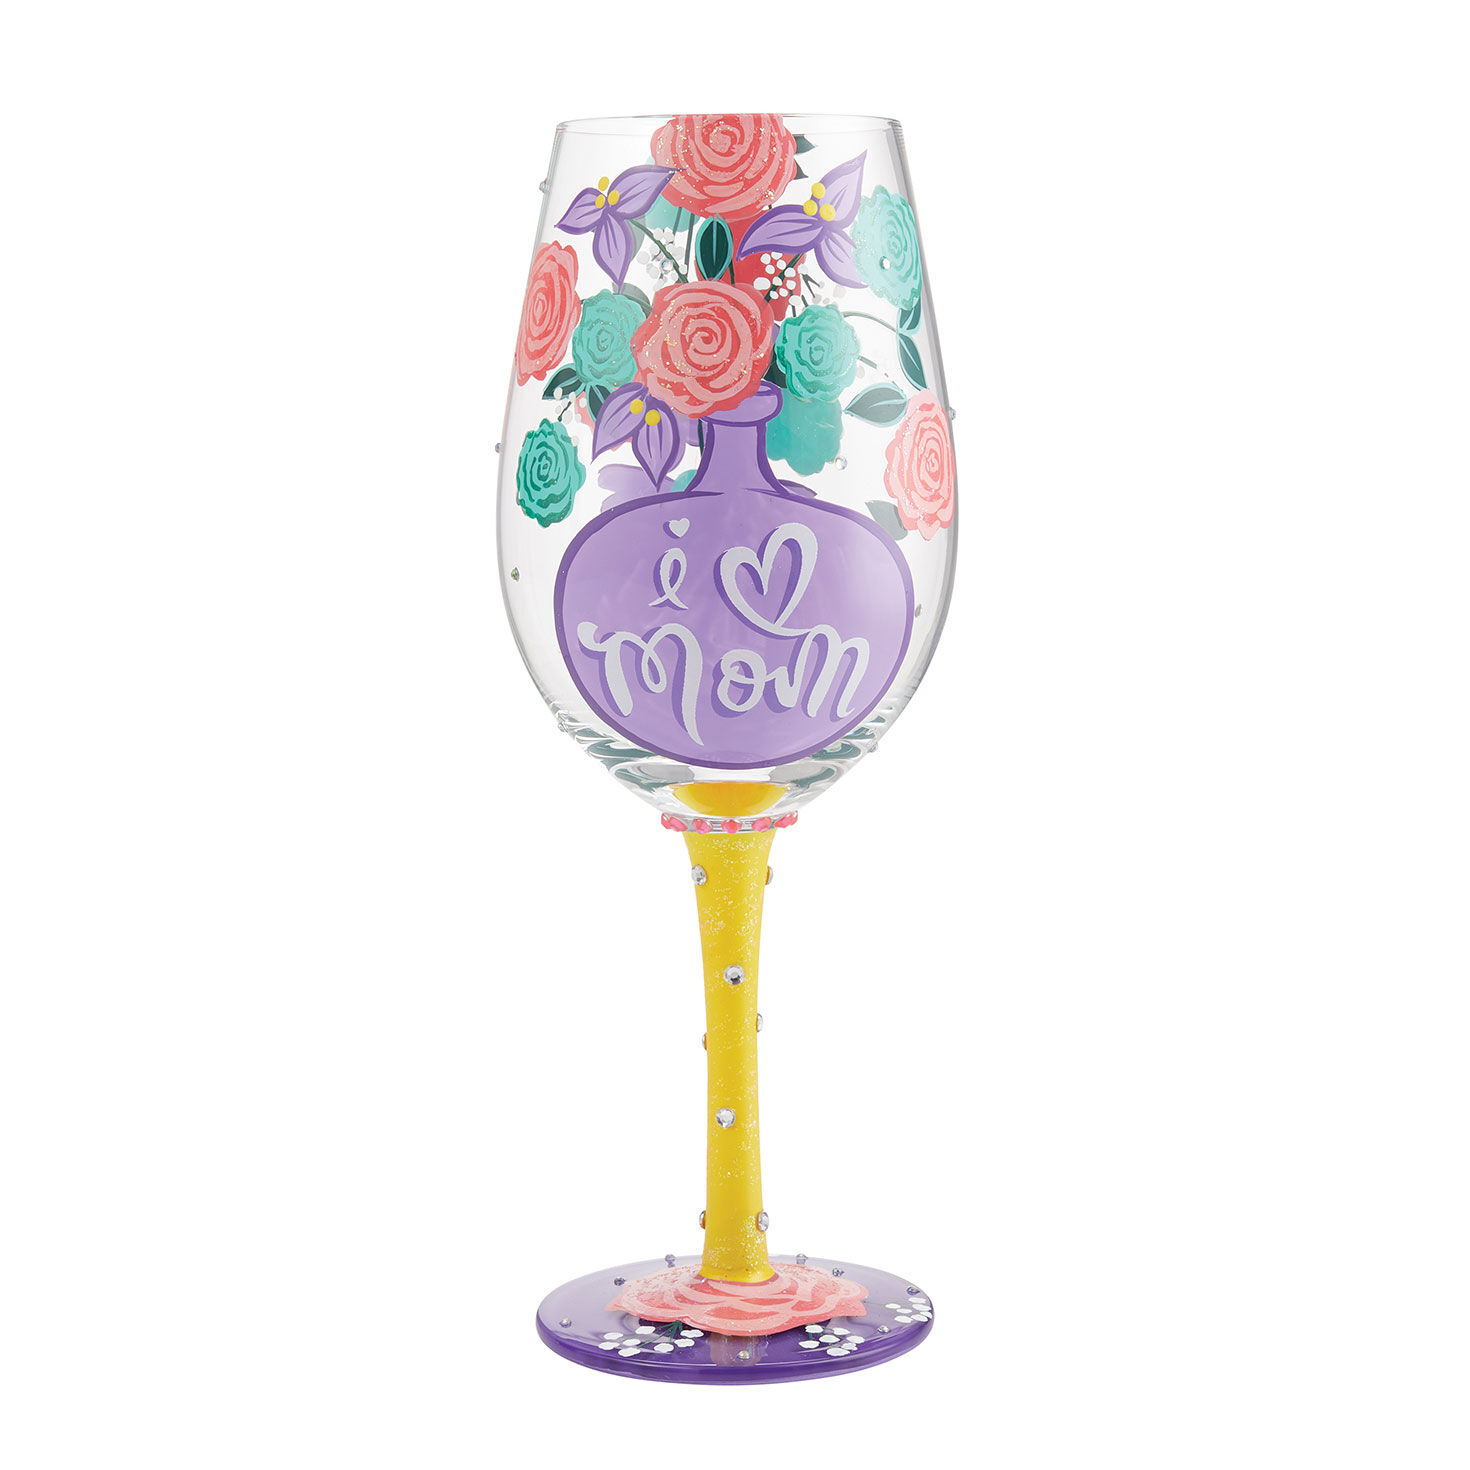 Lolita Love My Rescue Handpainted Wine Glass, 15 oz.